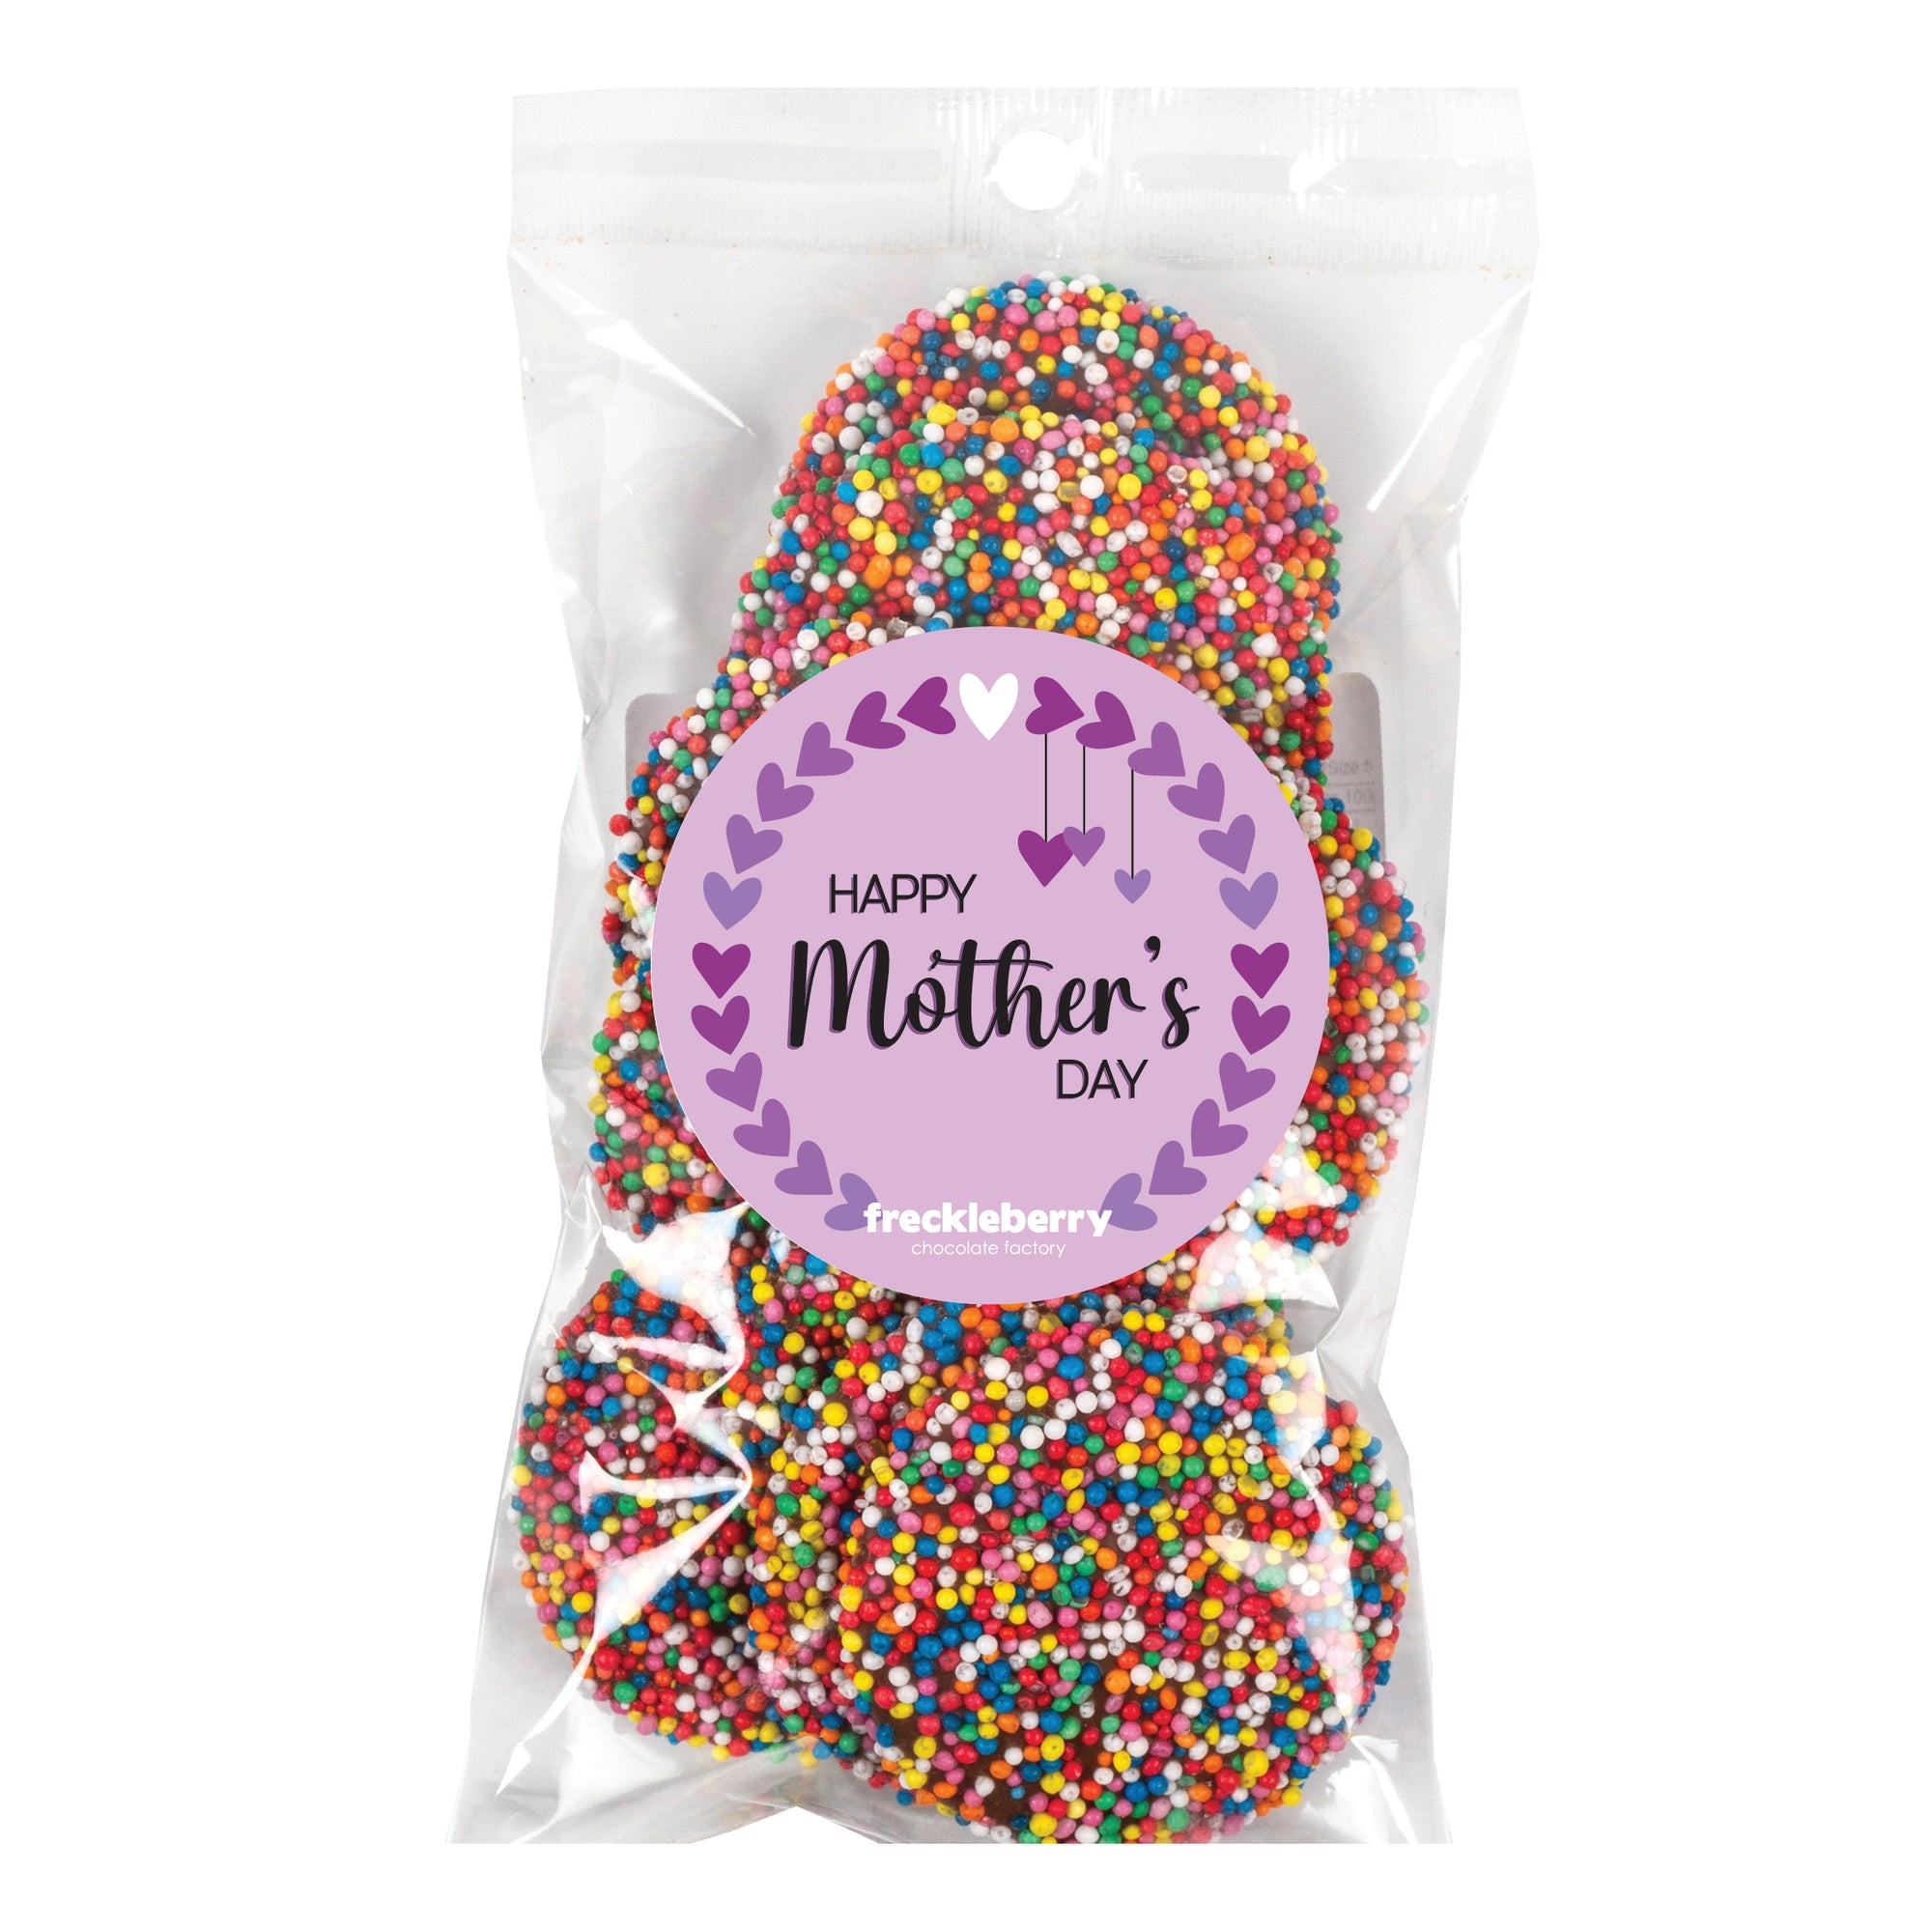 Mother's Day - Dark Chocolate Freckles 150g